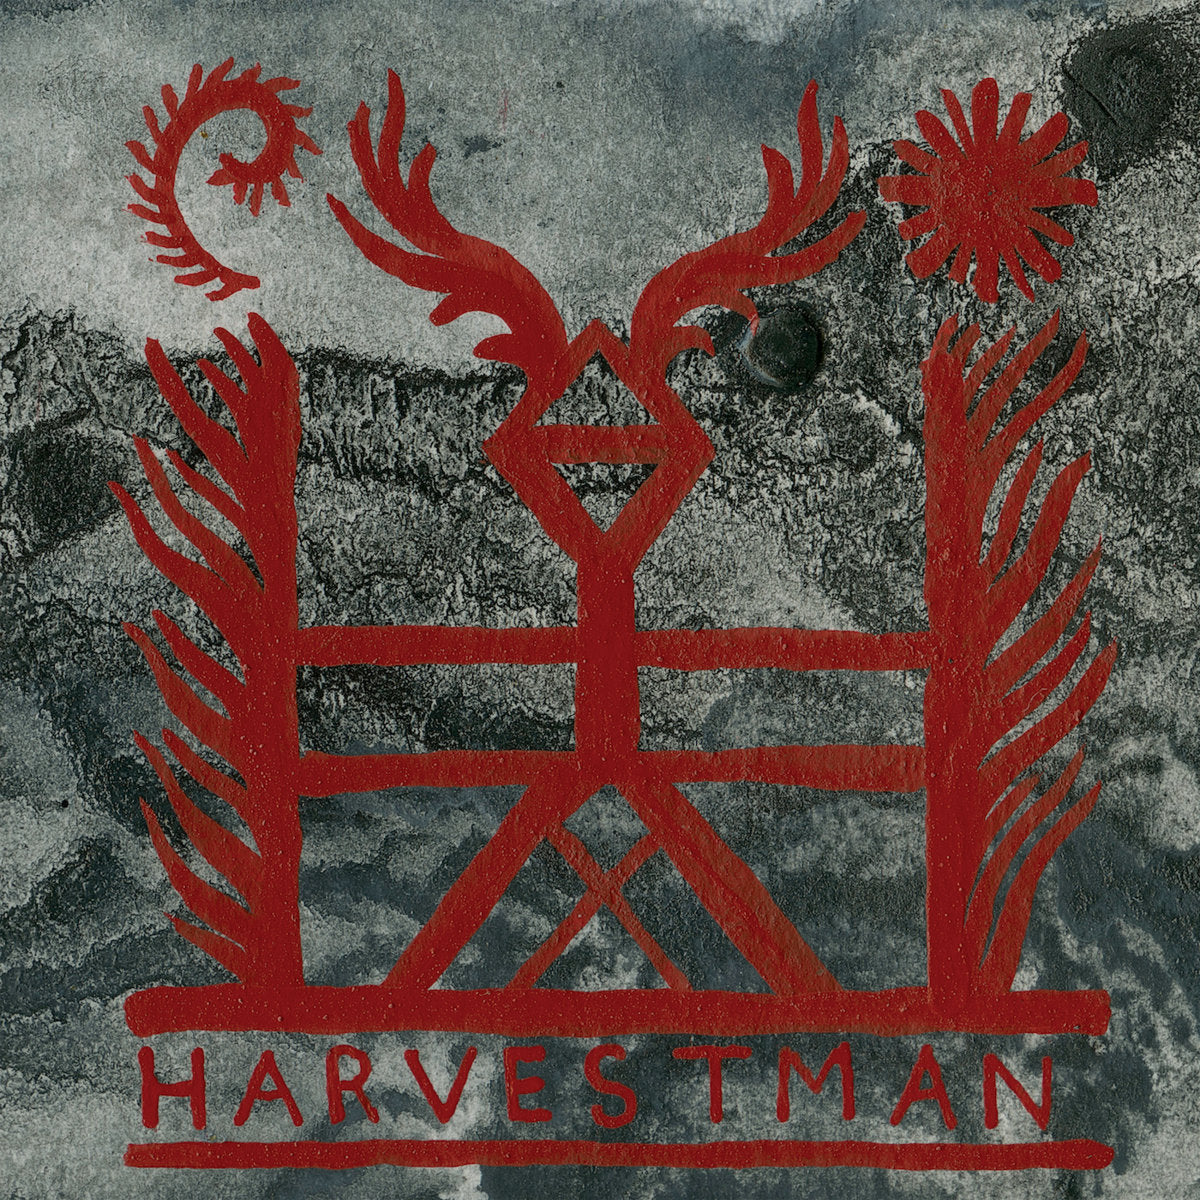 HARVESTMAN "Music For Megaliths" LP